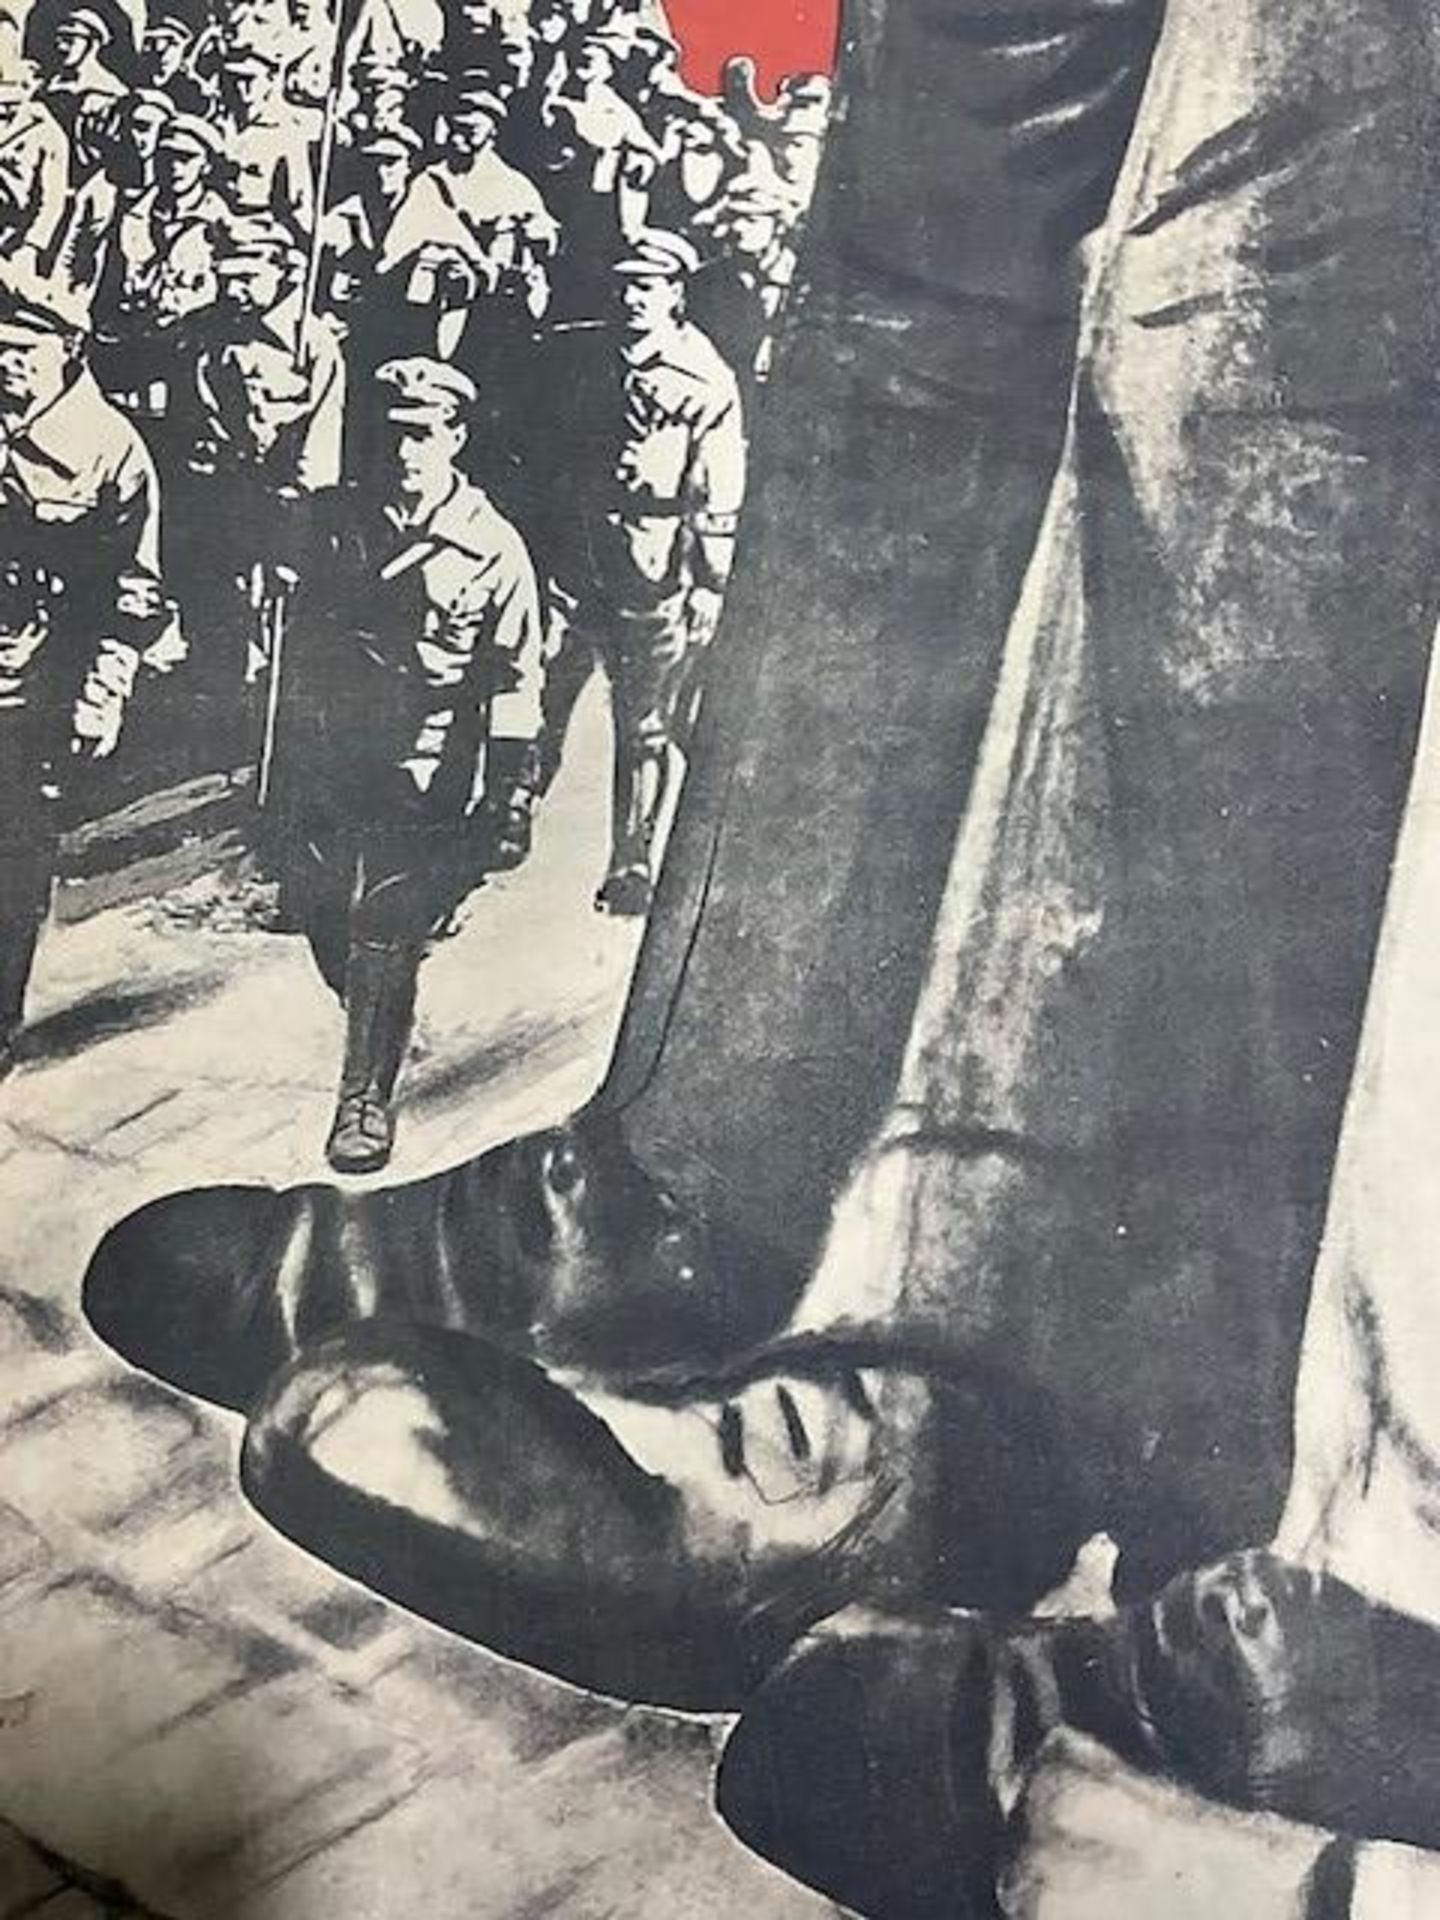 USSR Sovit Union Propaganda Poster - Image 7 of 11